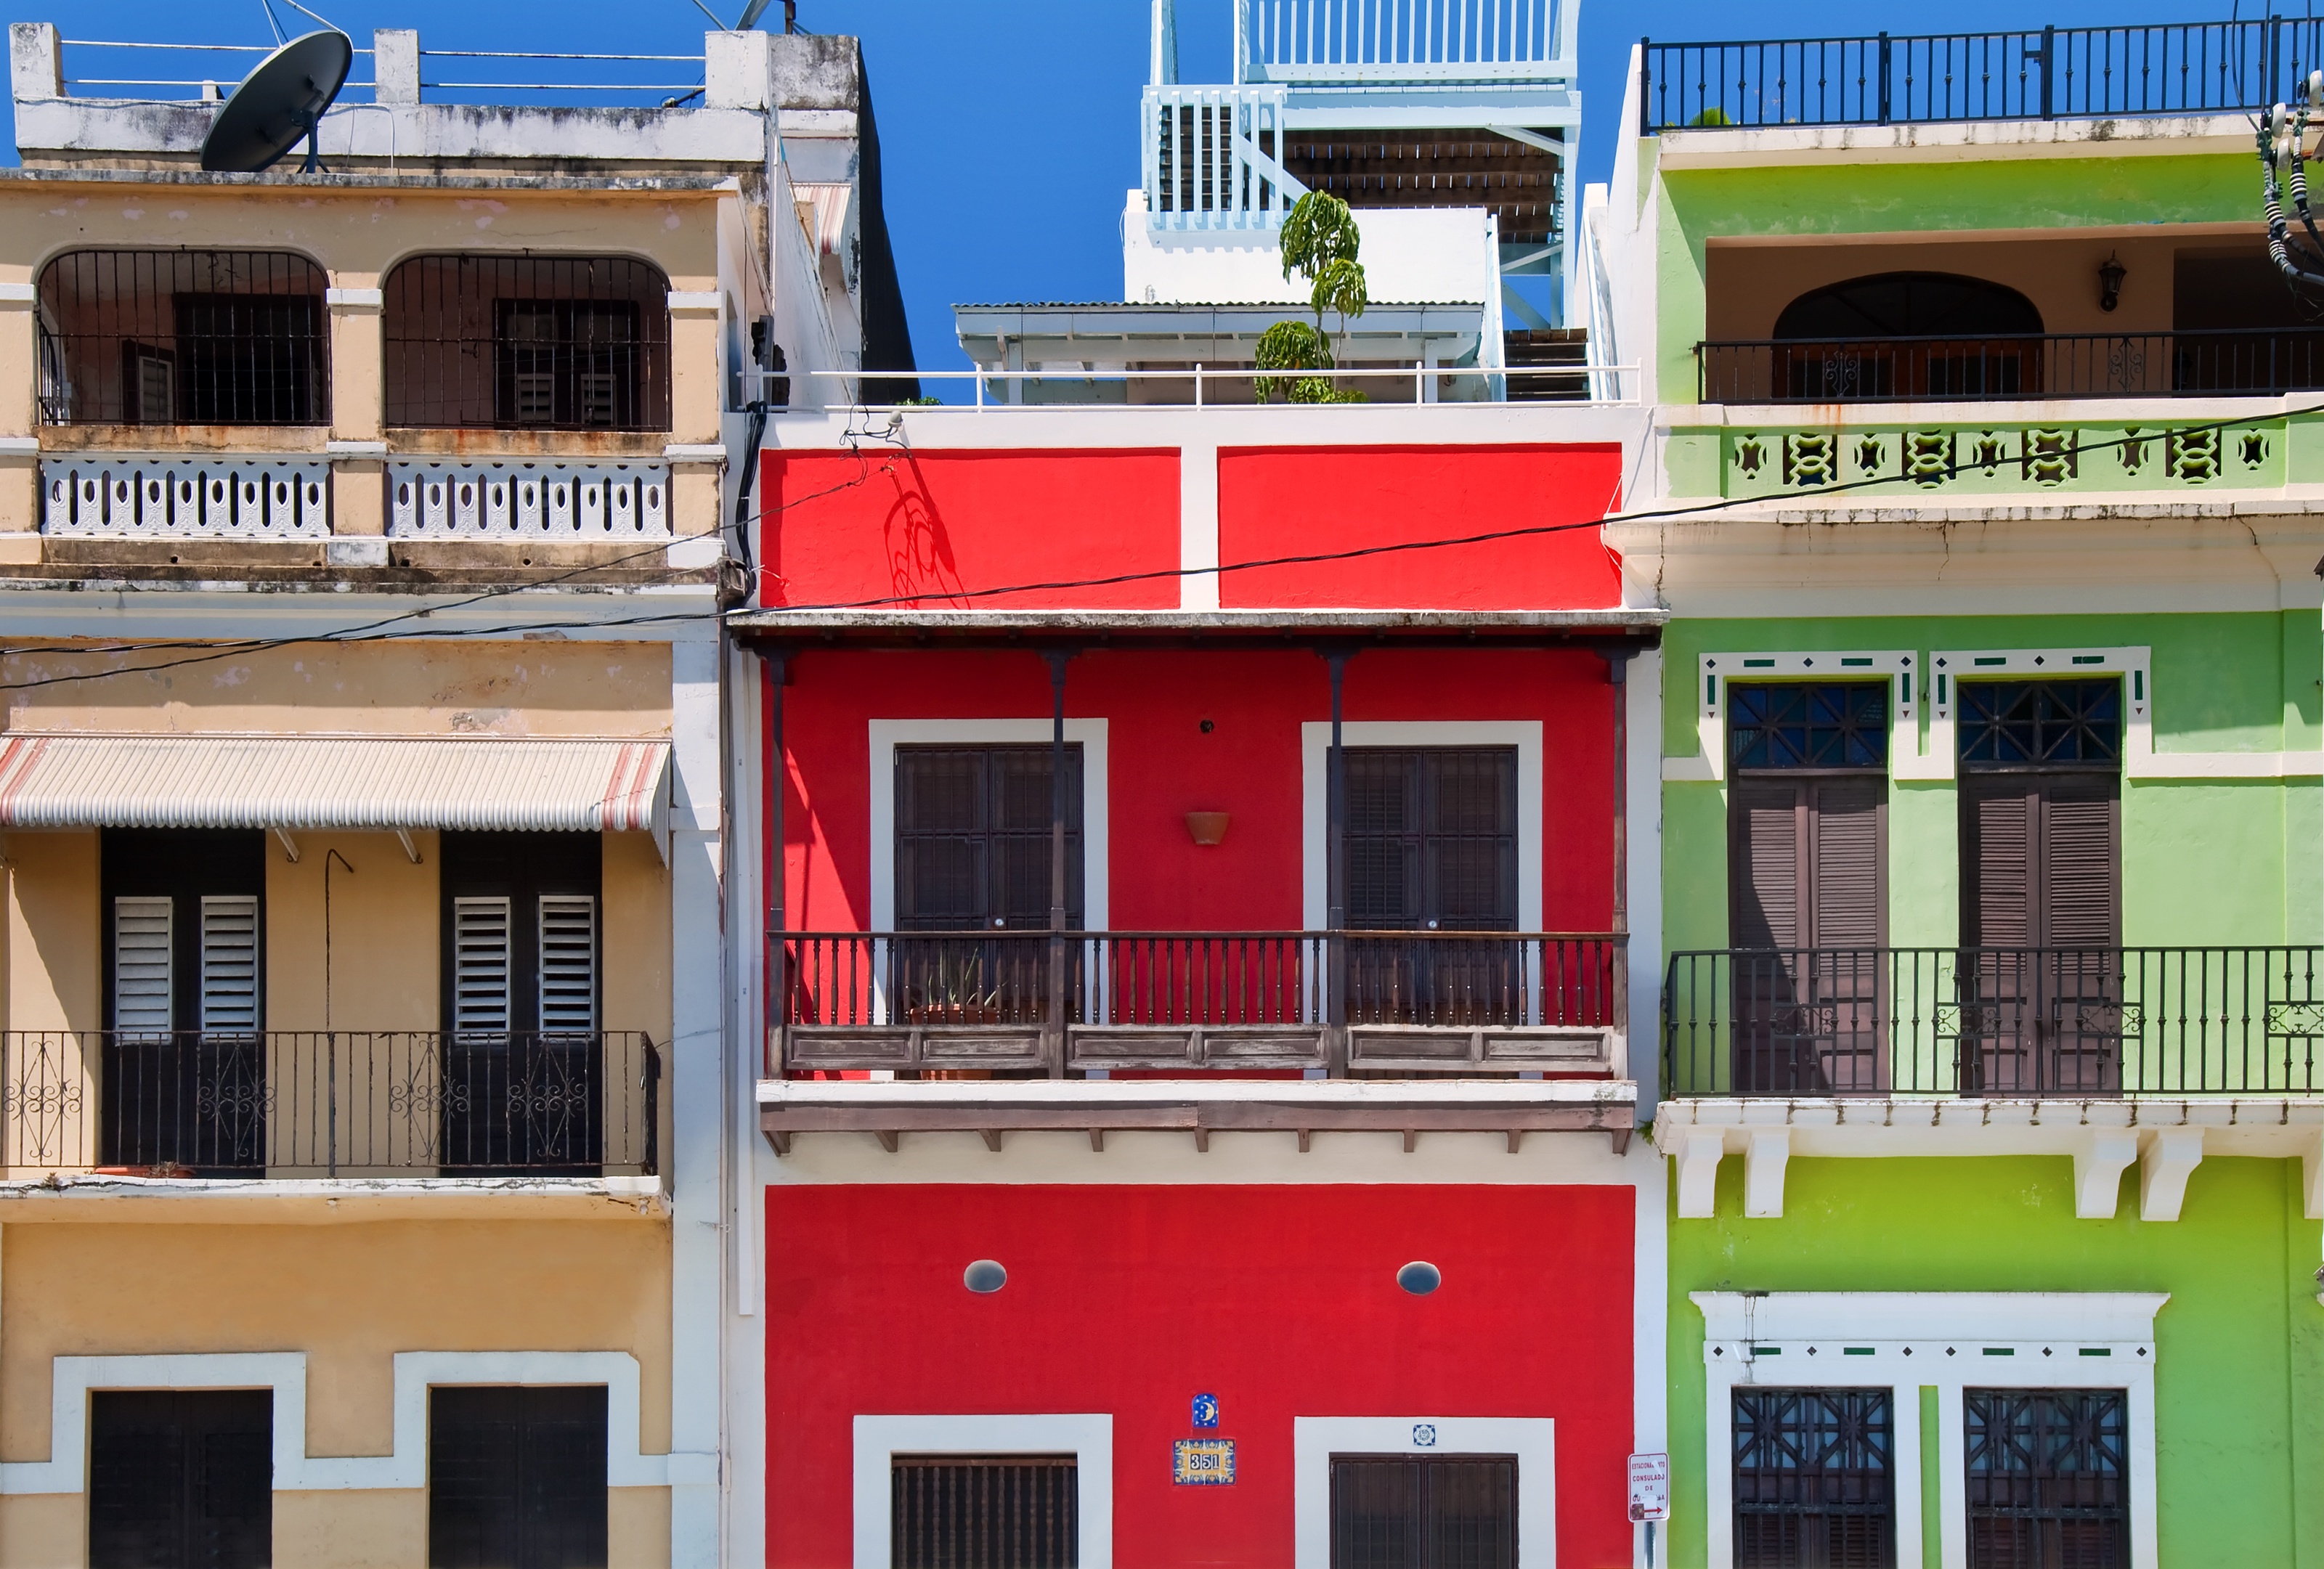 Colorful buildings in Old San Juan